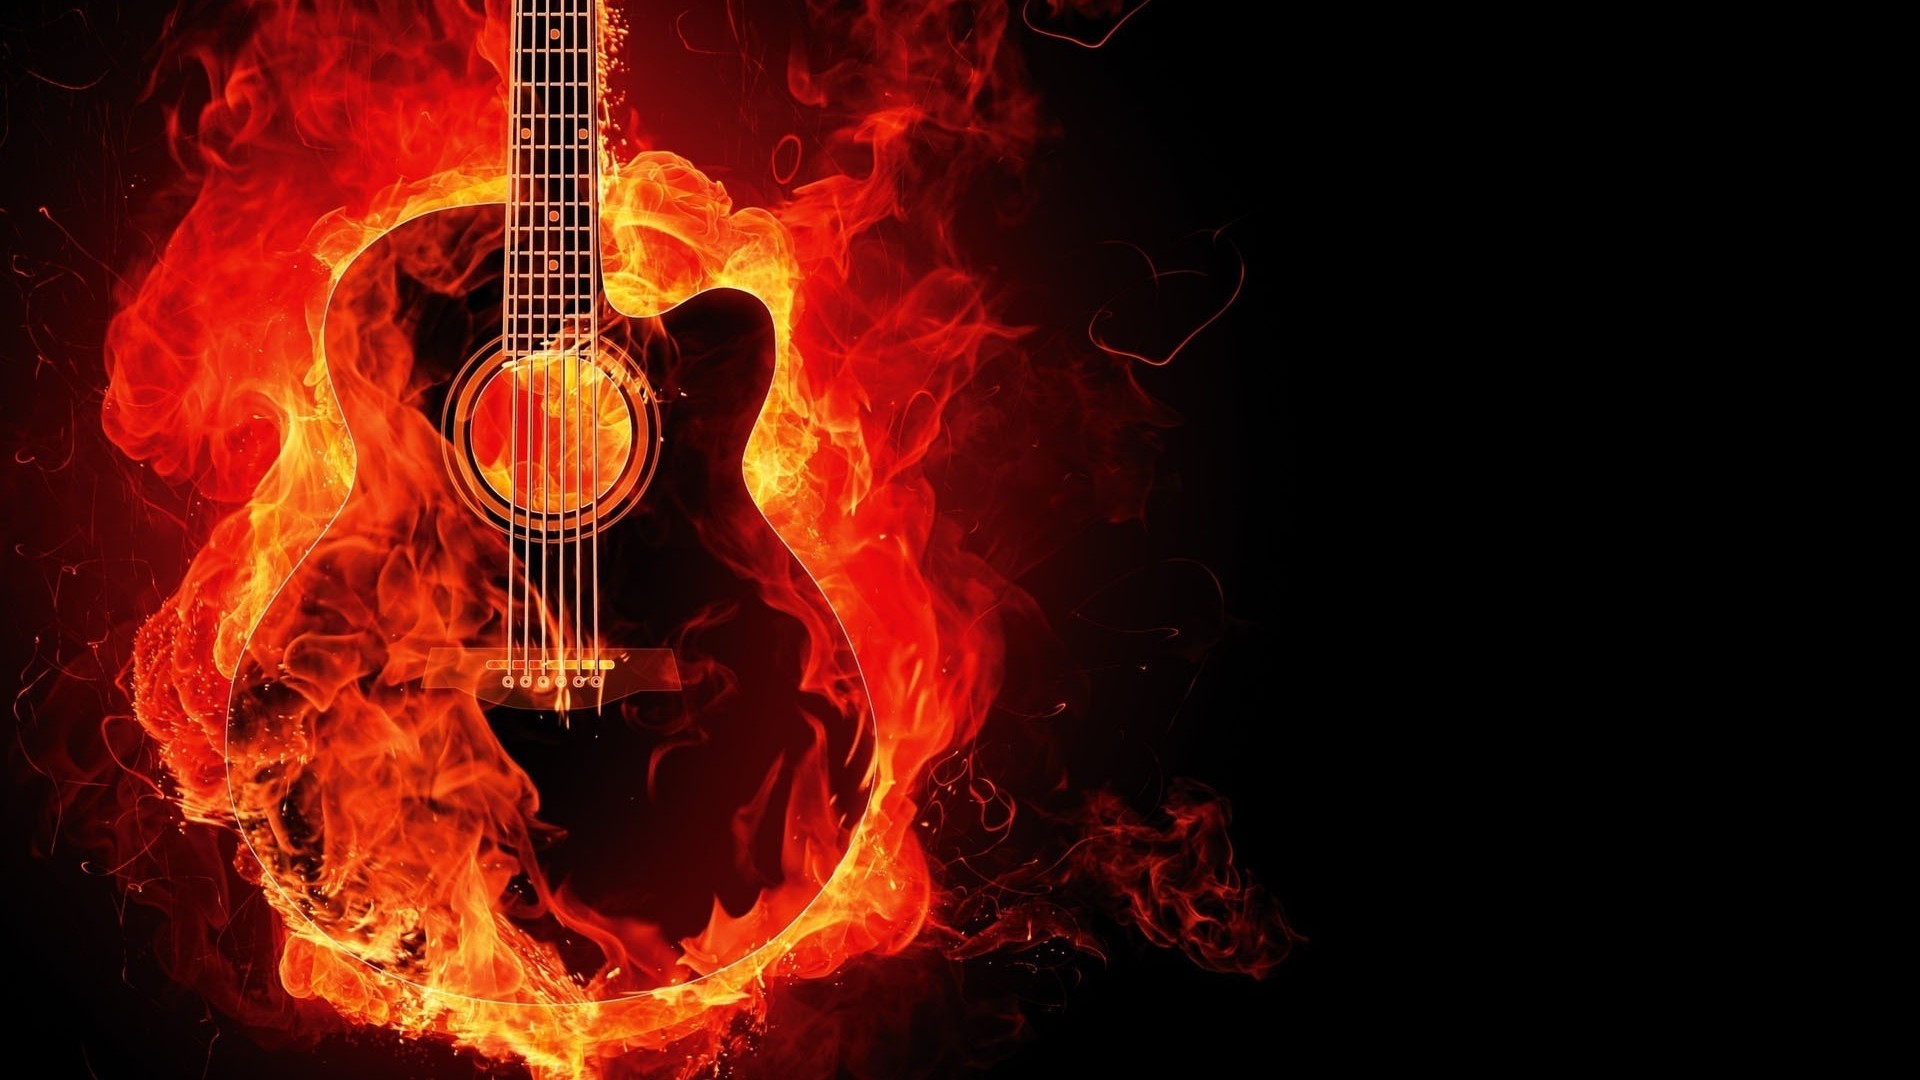 guitar-flame-fire-music-full-screen-hd-wallpaper-photo-desktop-background | EN World | Dungeons & Dragons | Tabletop Roleplaying  Games